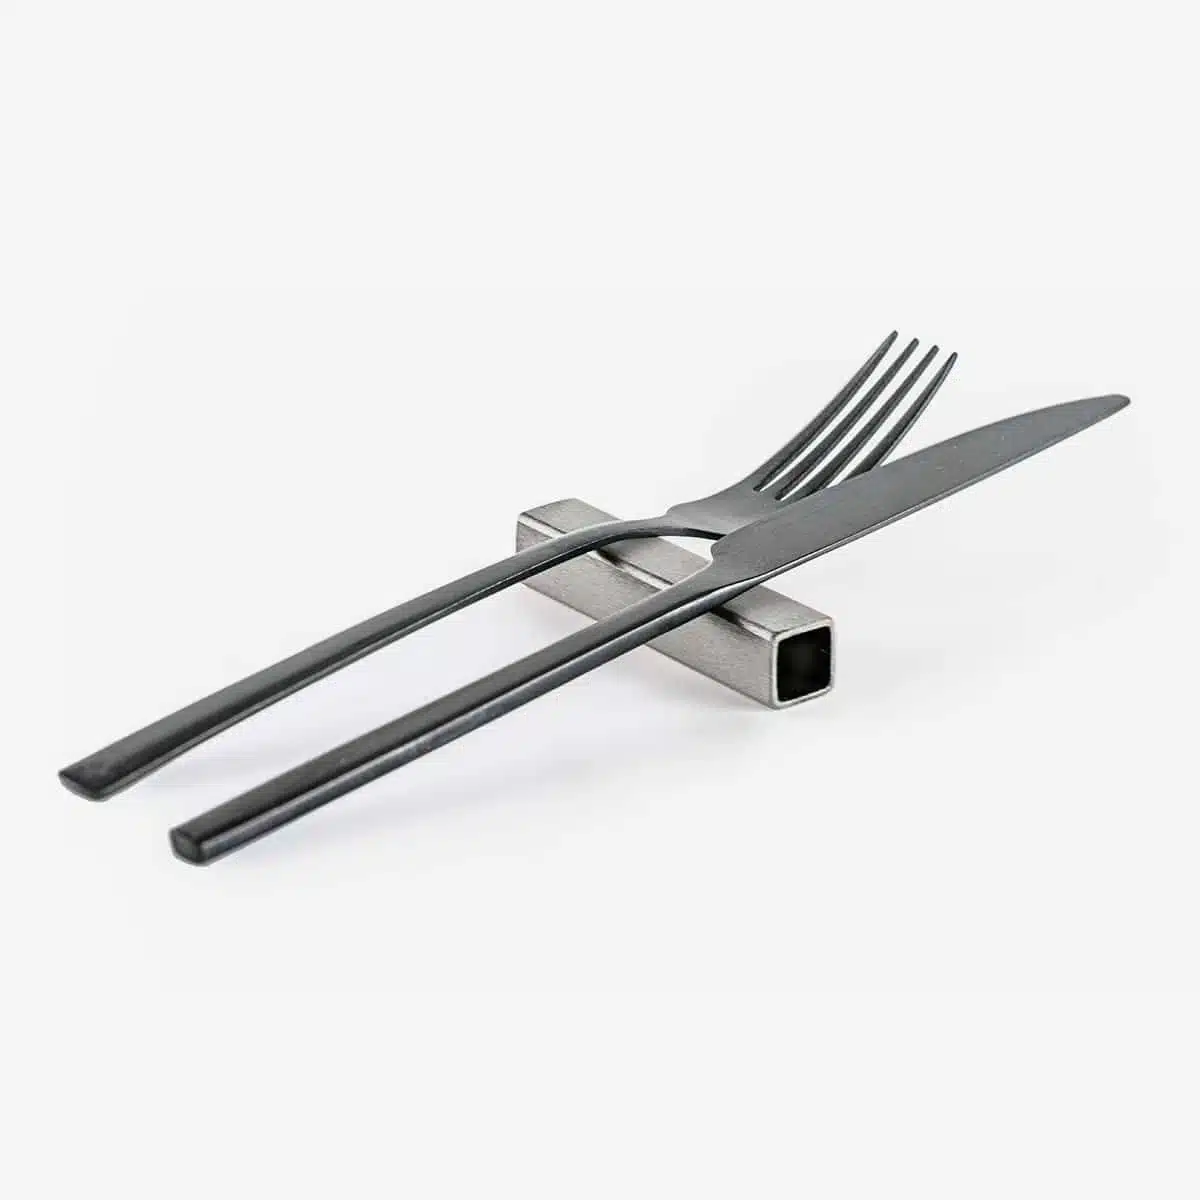 Glazed stainless steel cutlery rest